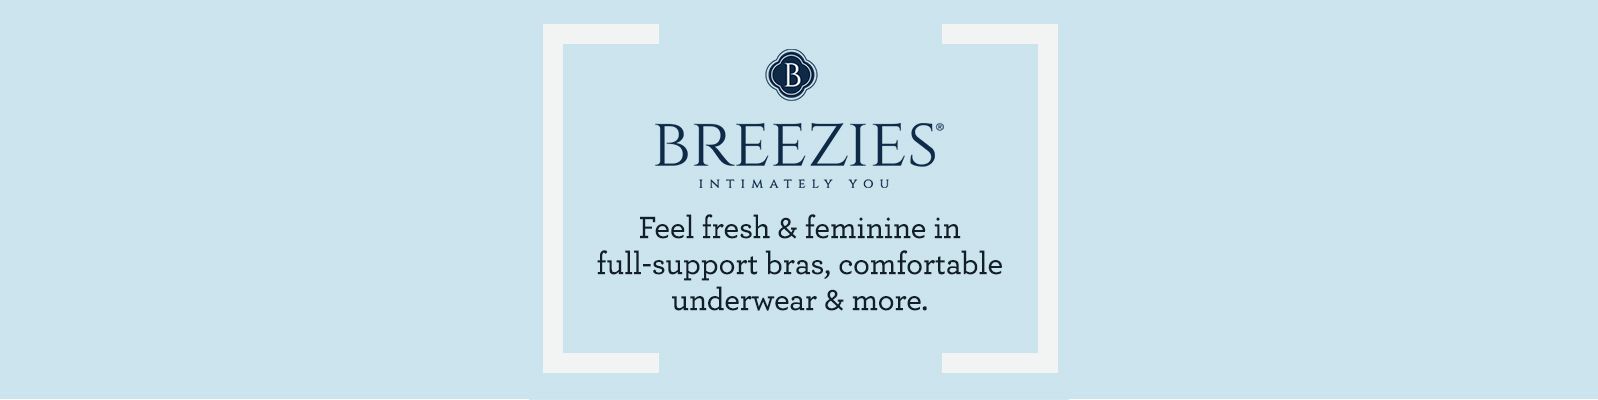 Breezies Underwear & Intimates Collection 